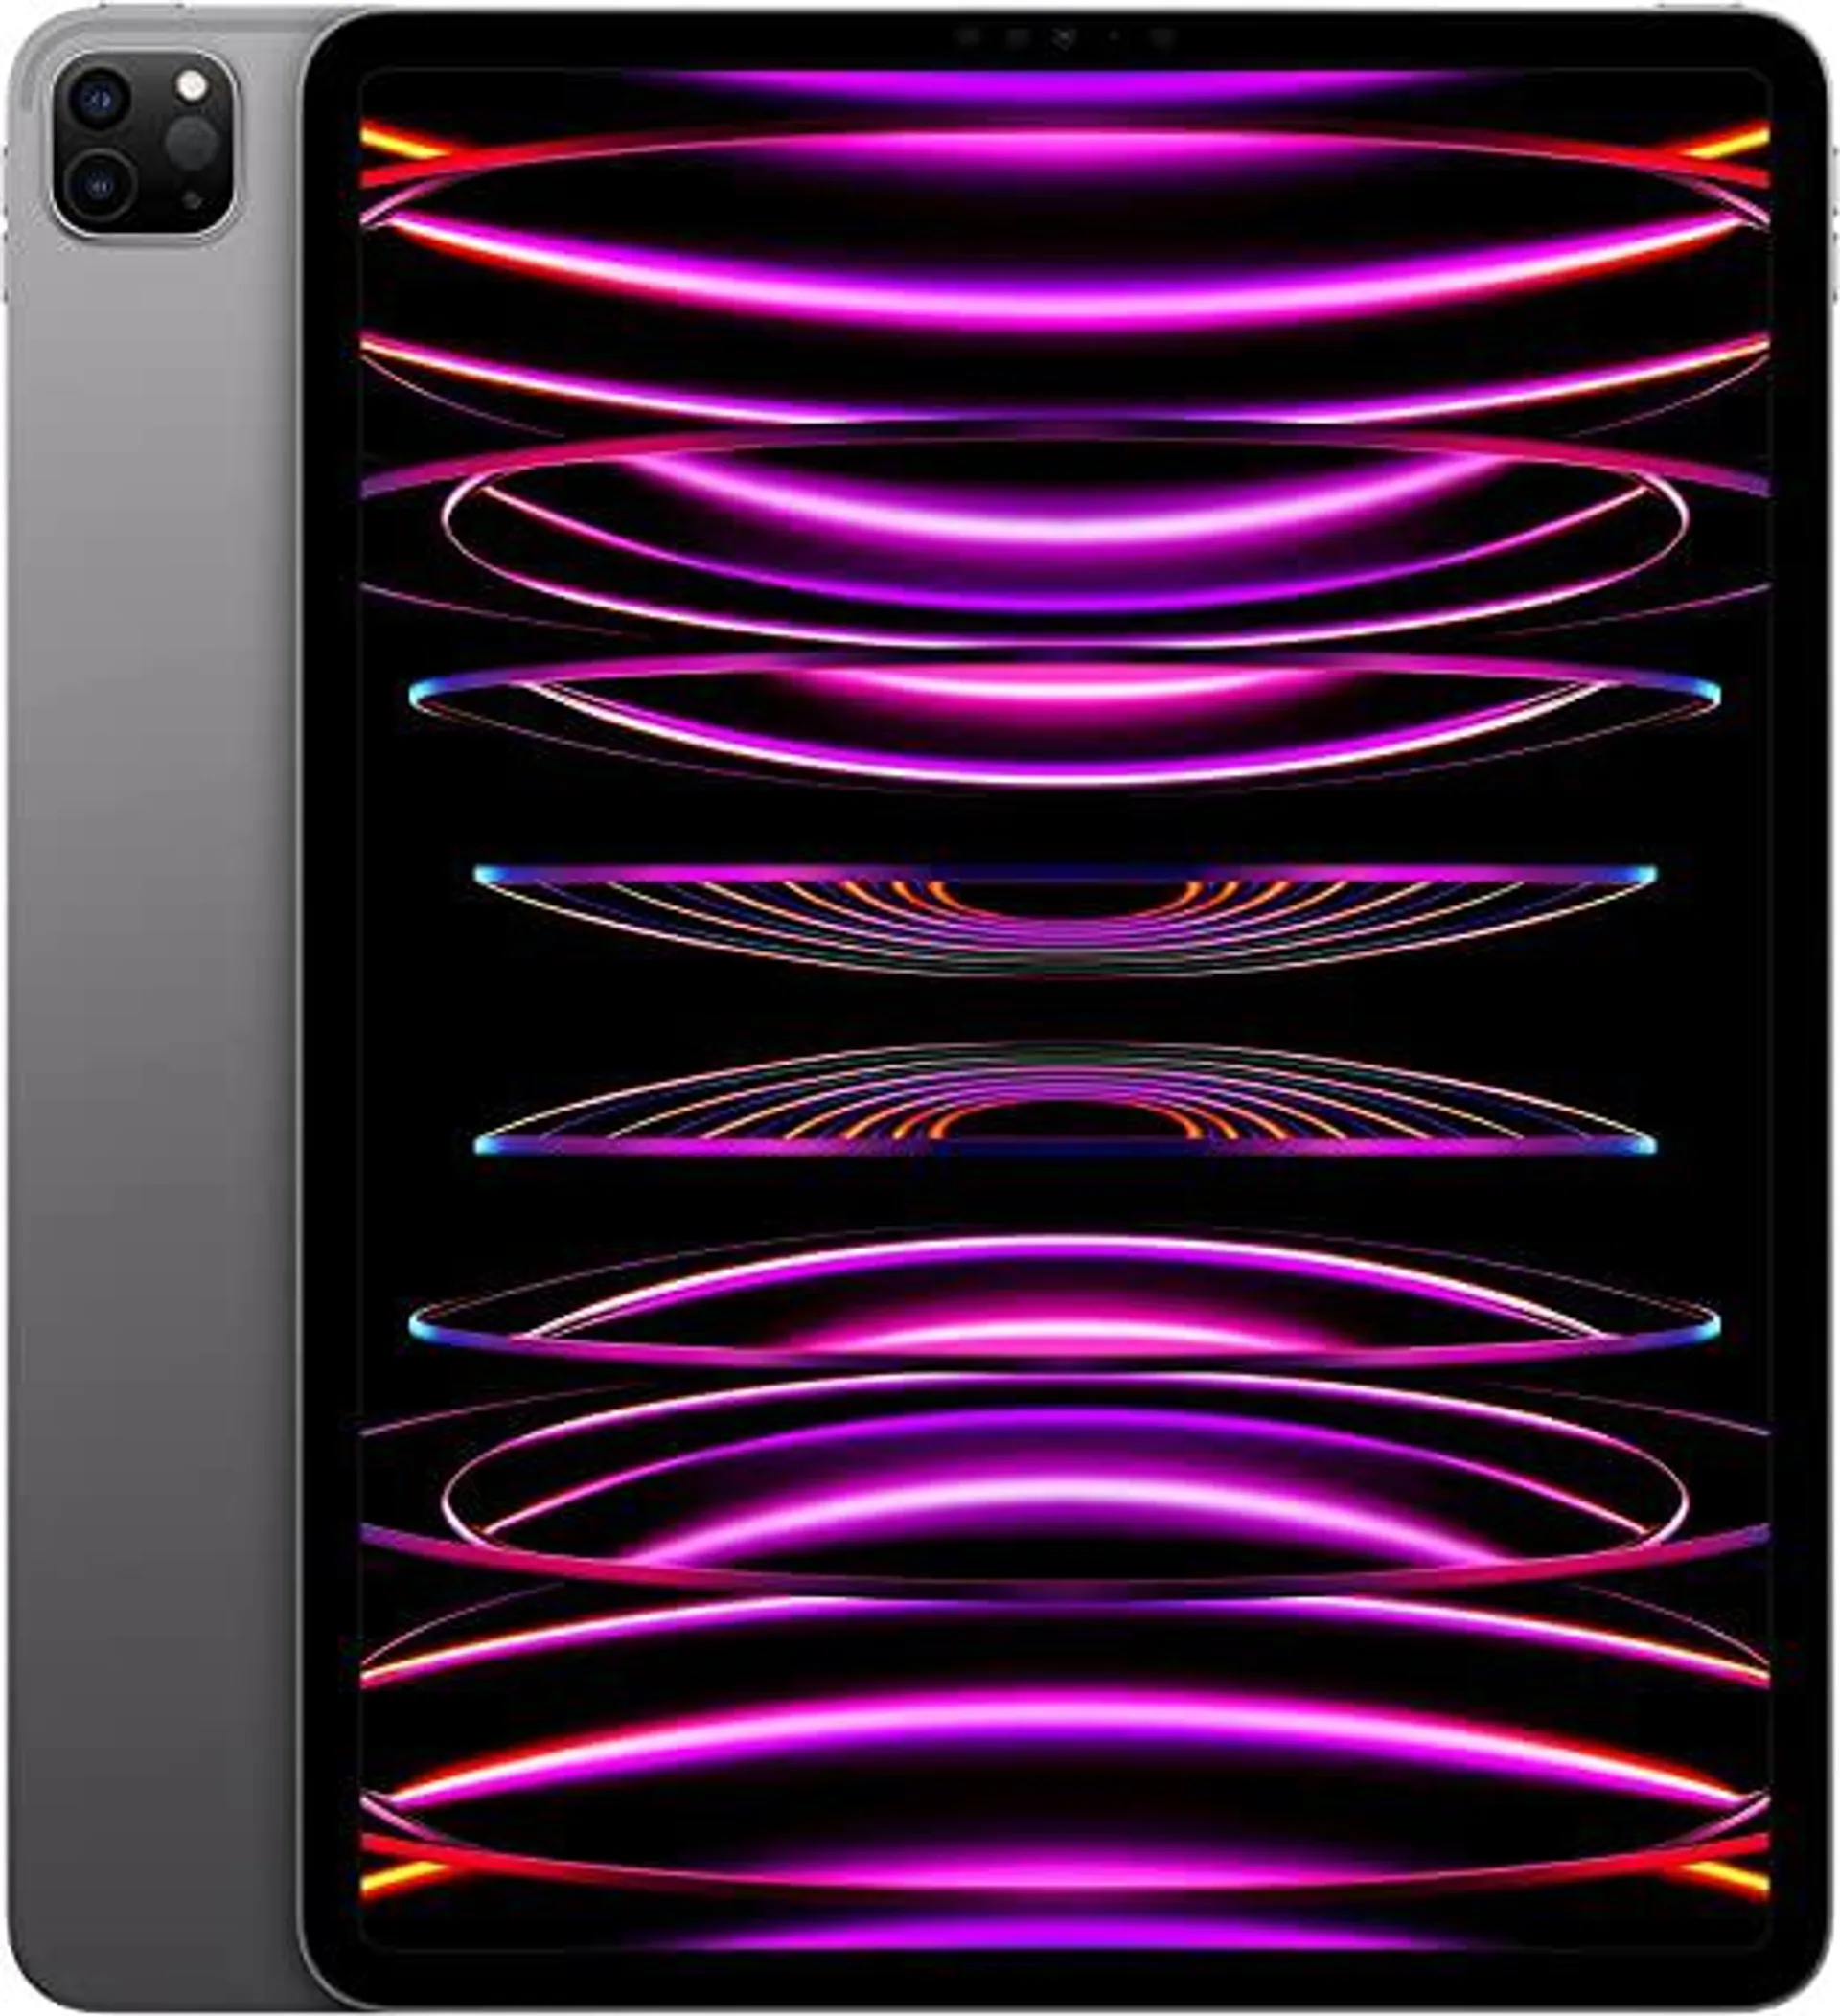 2022 Apple 12.9-inch iPad Pro (Wi-Fi, 256GB) - Space Gray (6th Generation)